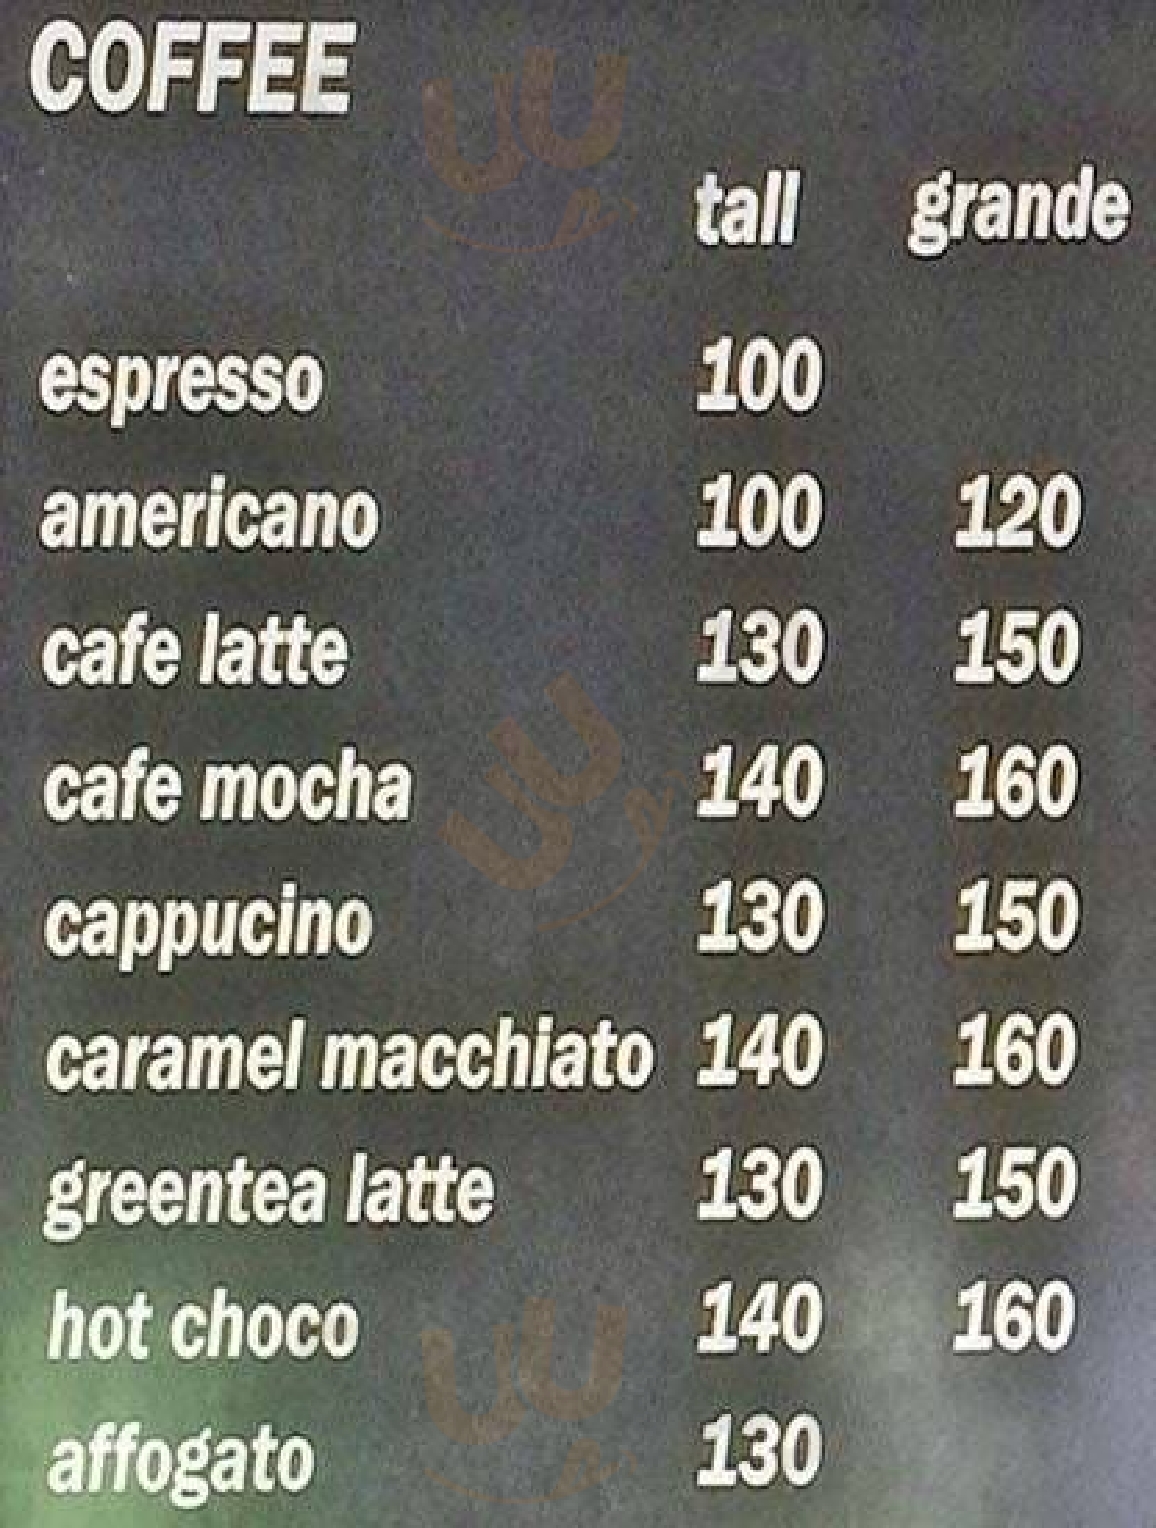 Coffeeway Lapu Lapu Menu - 1